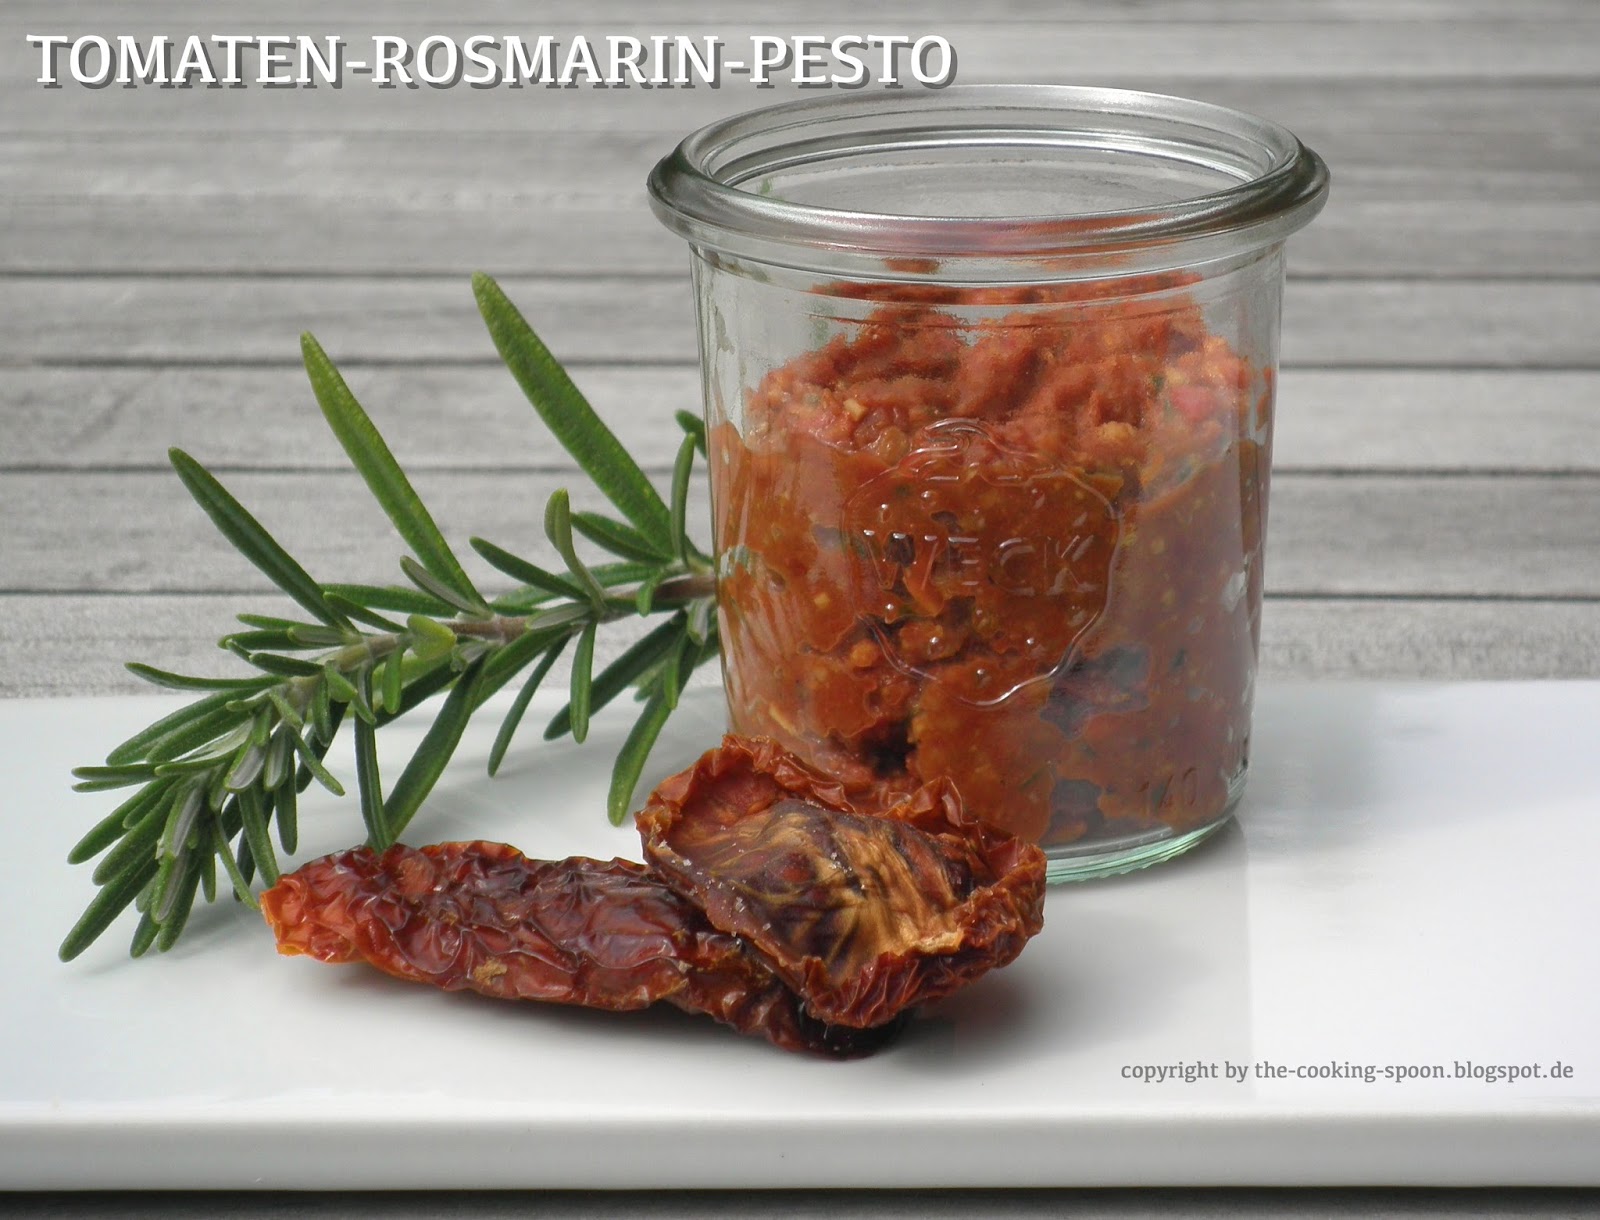 The Cooking Spoon: Tomaten-Rosmarin-Pesto